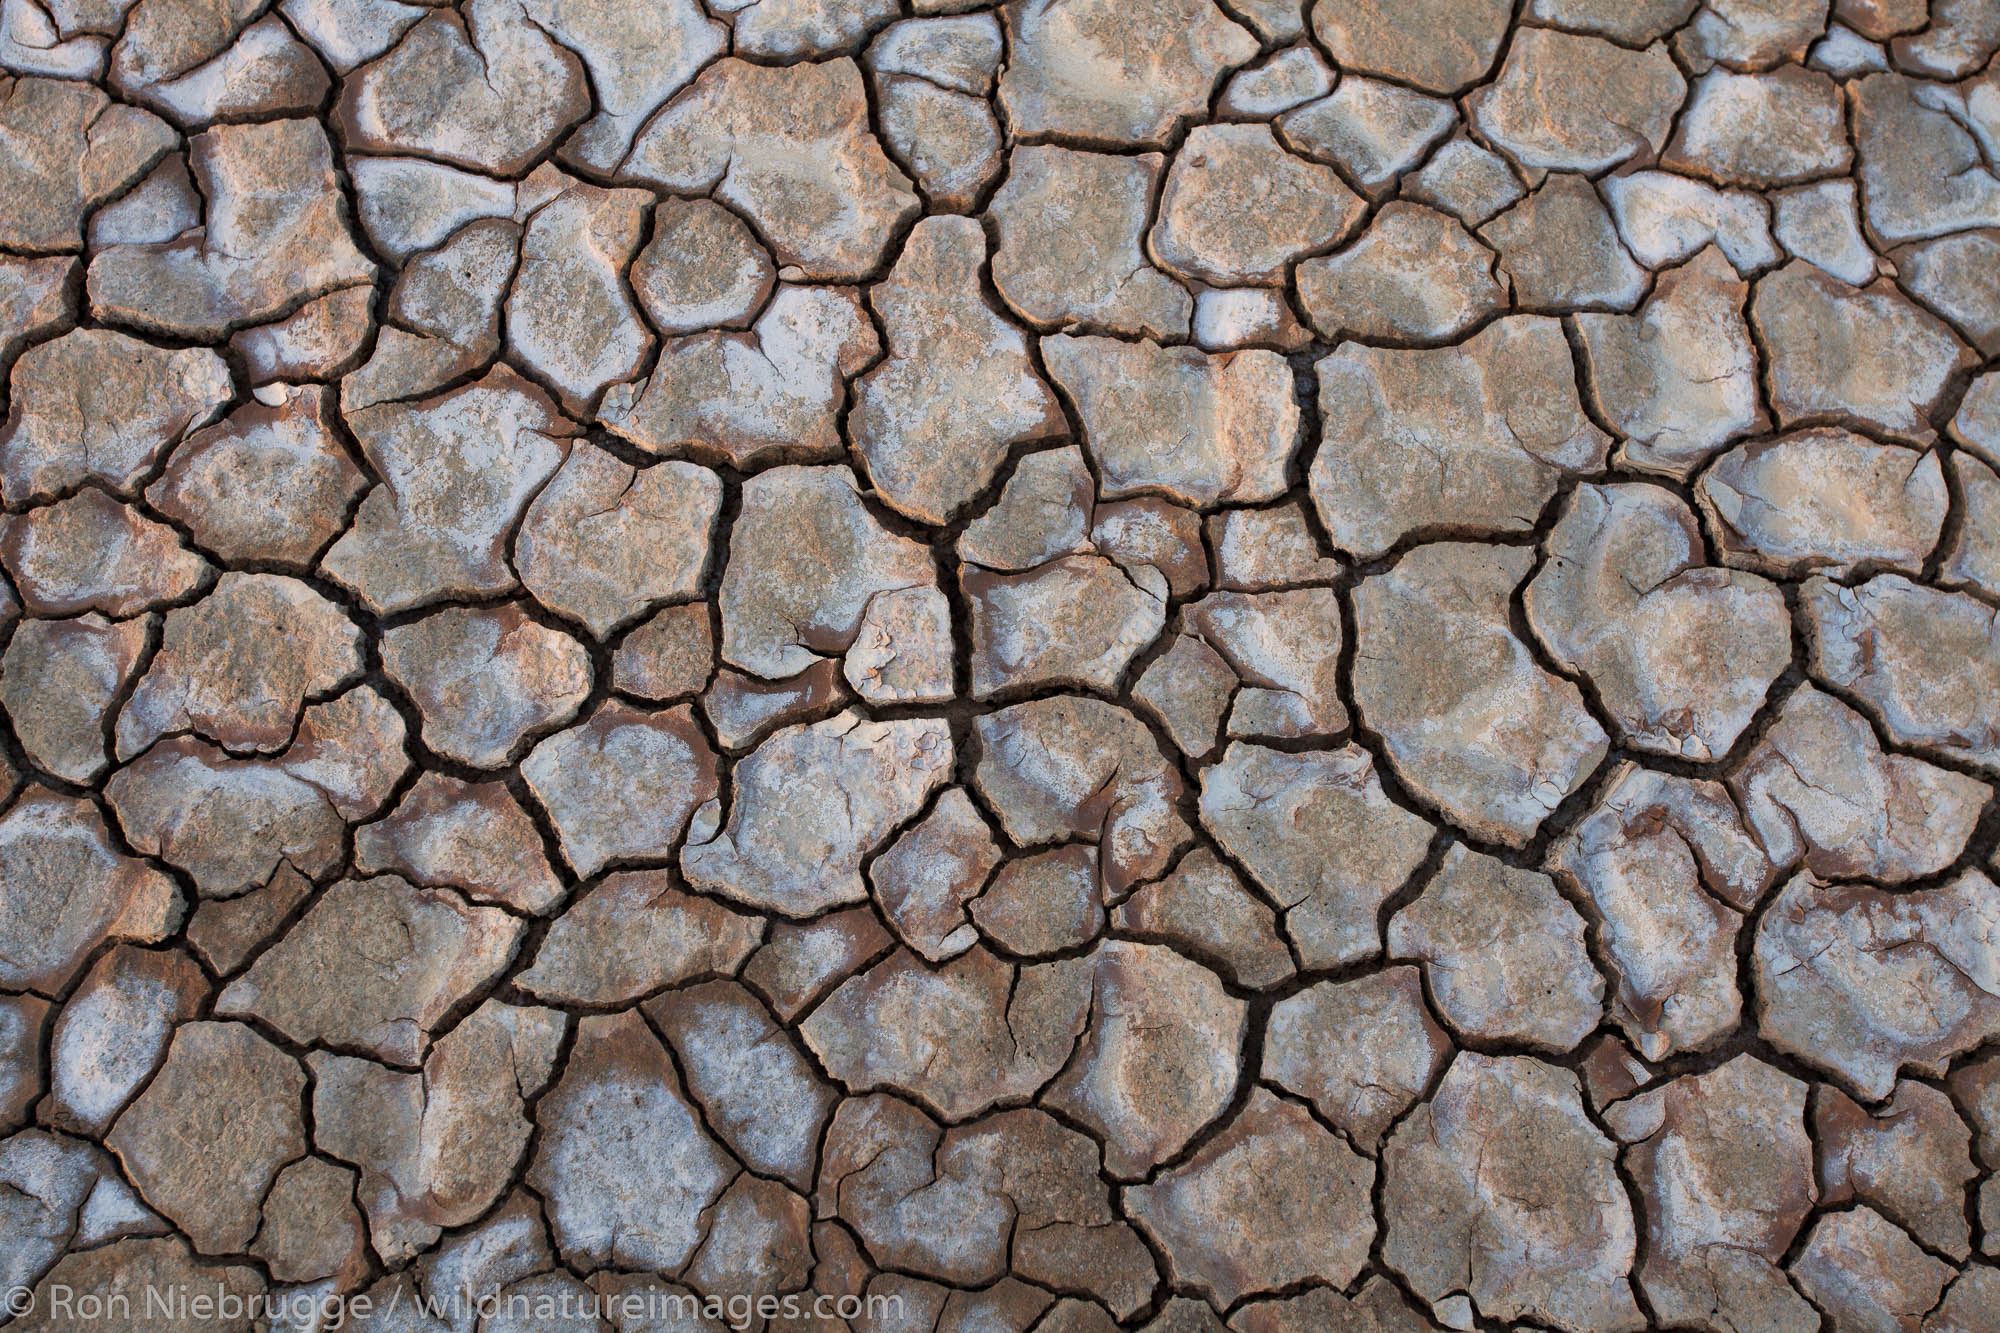 Dry lake bed, Anza-Borrego Desert State Park, California.